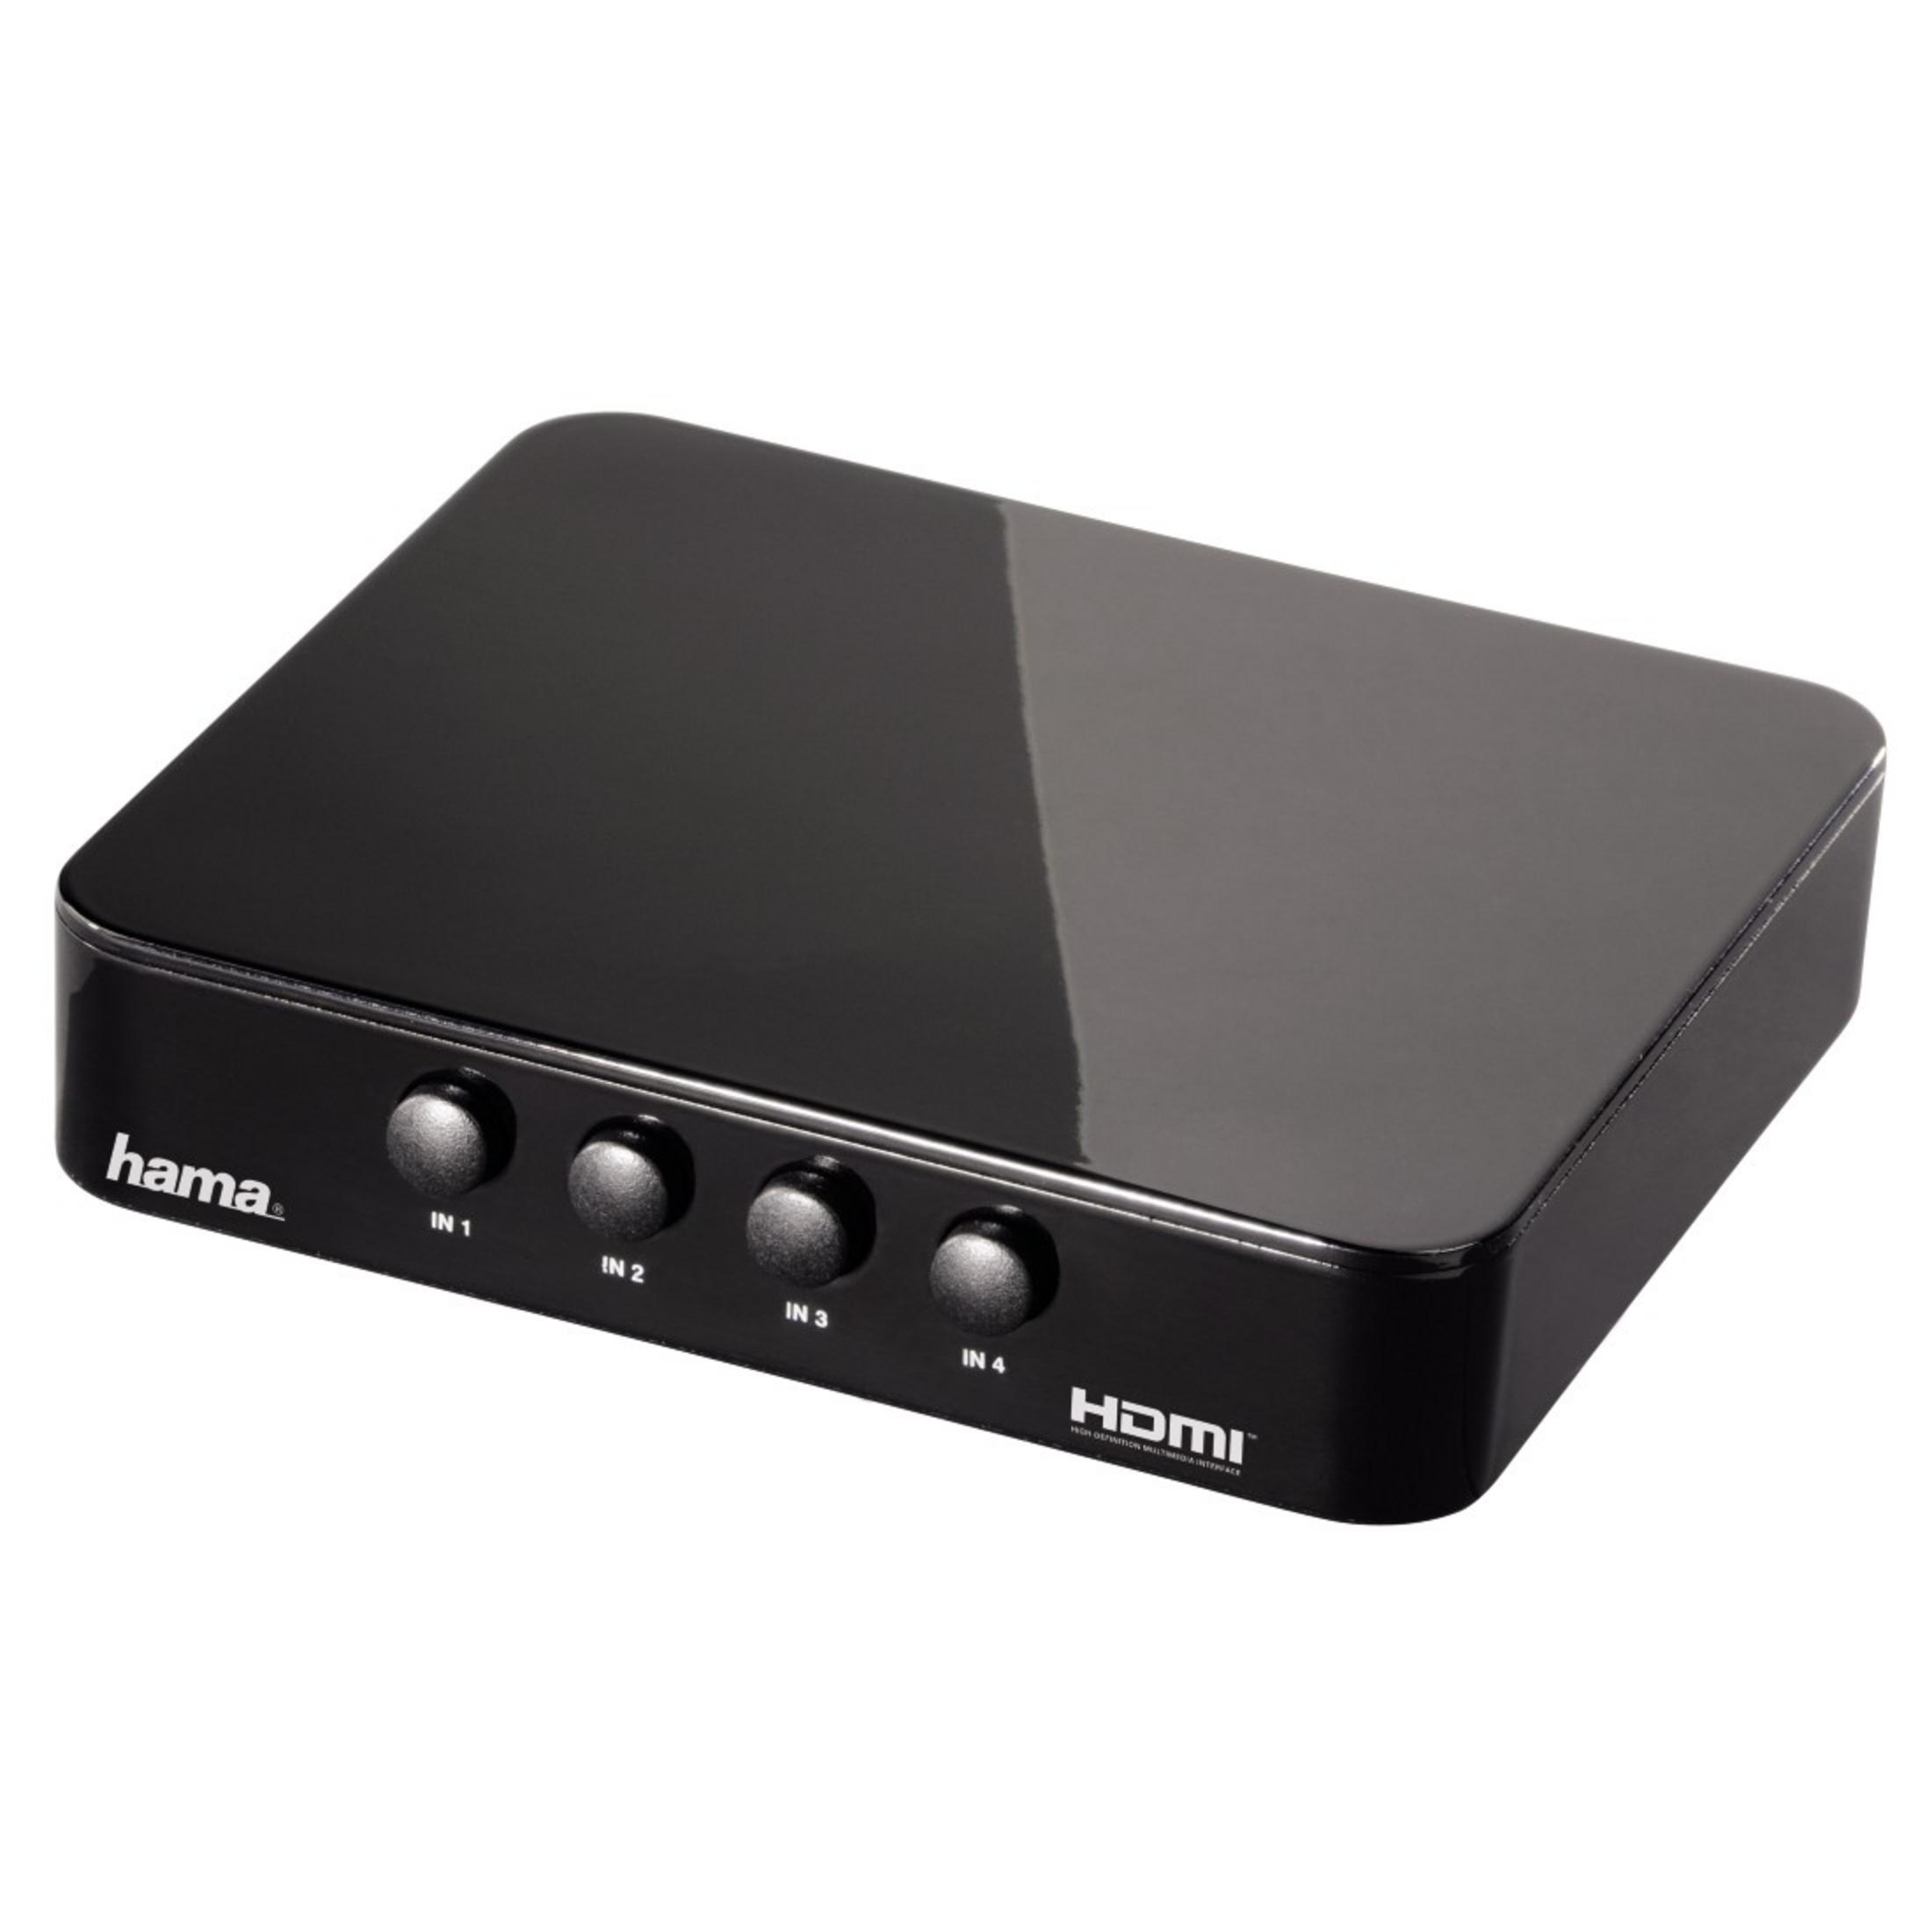 UMSCHALTPULT HDMI-Umschaltpult HAMA 083186 G-410, HDMI